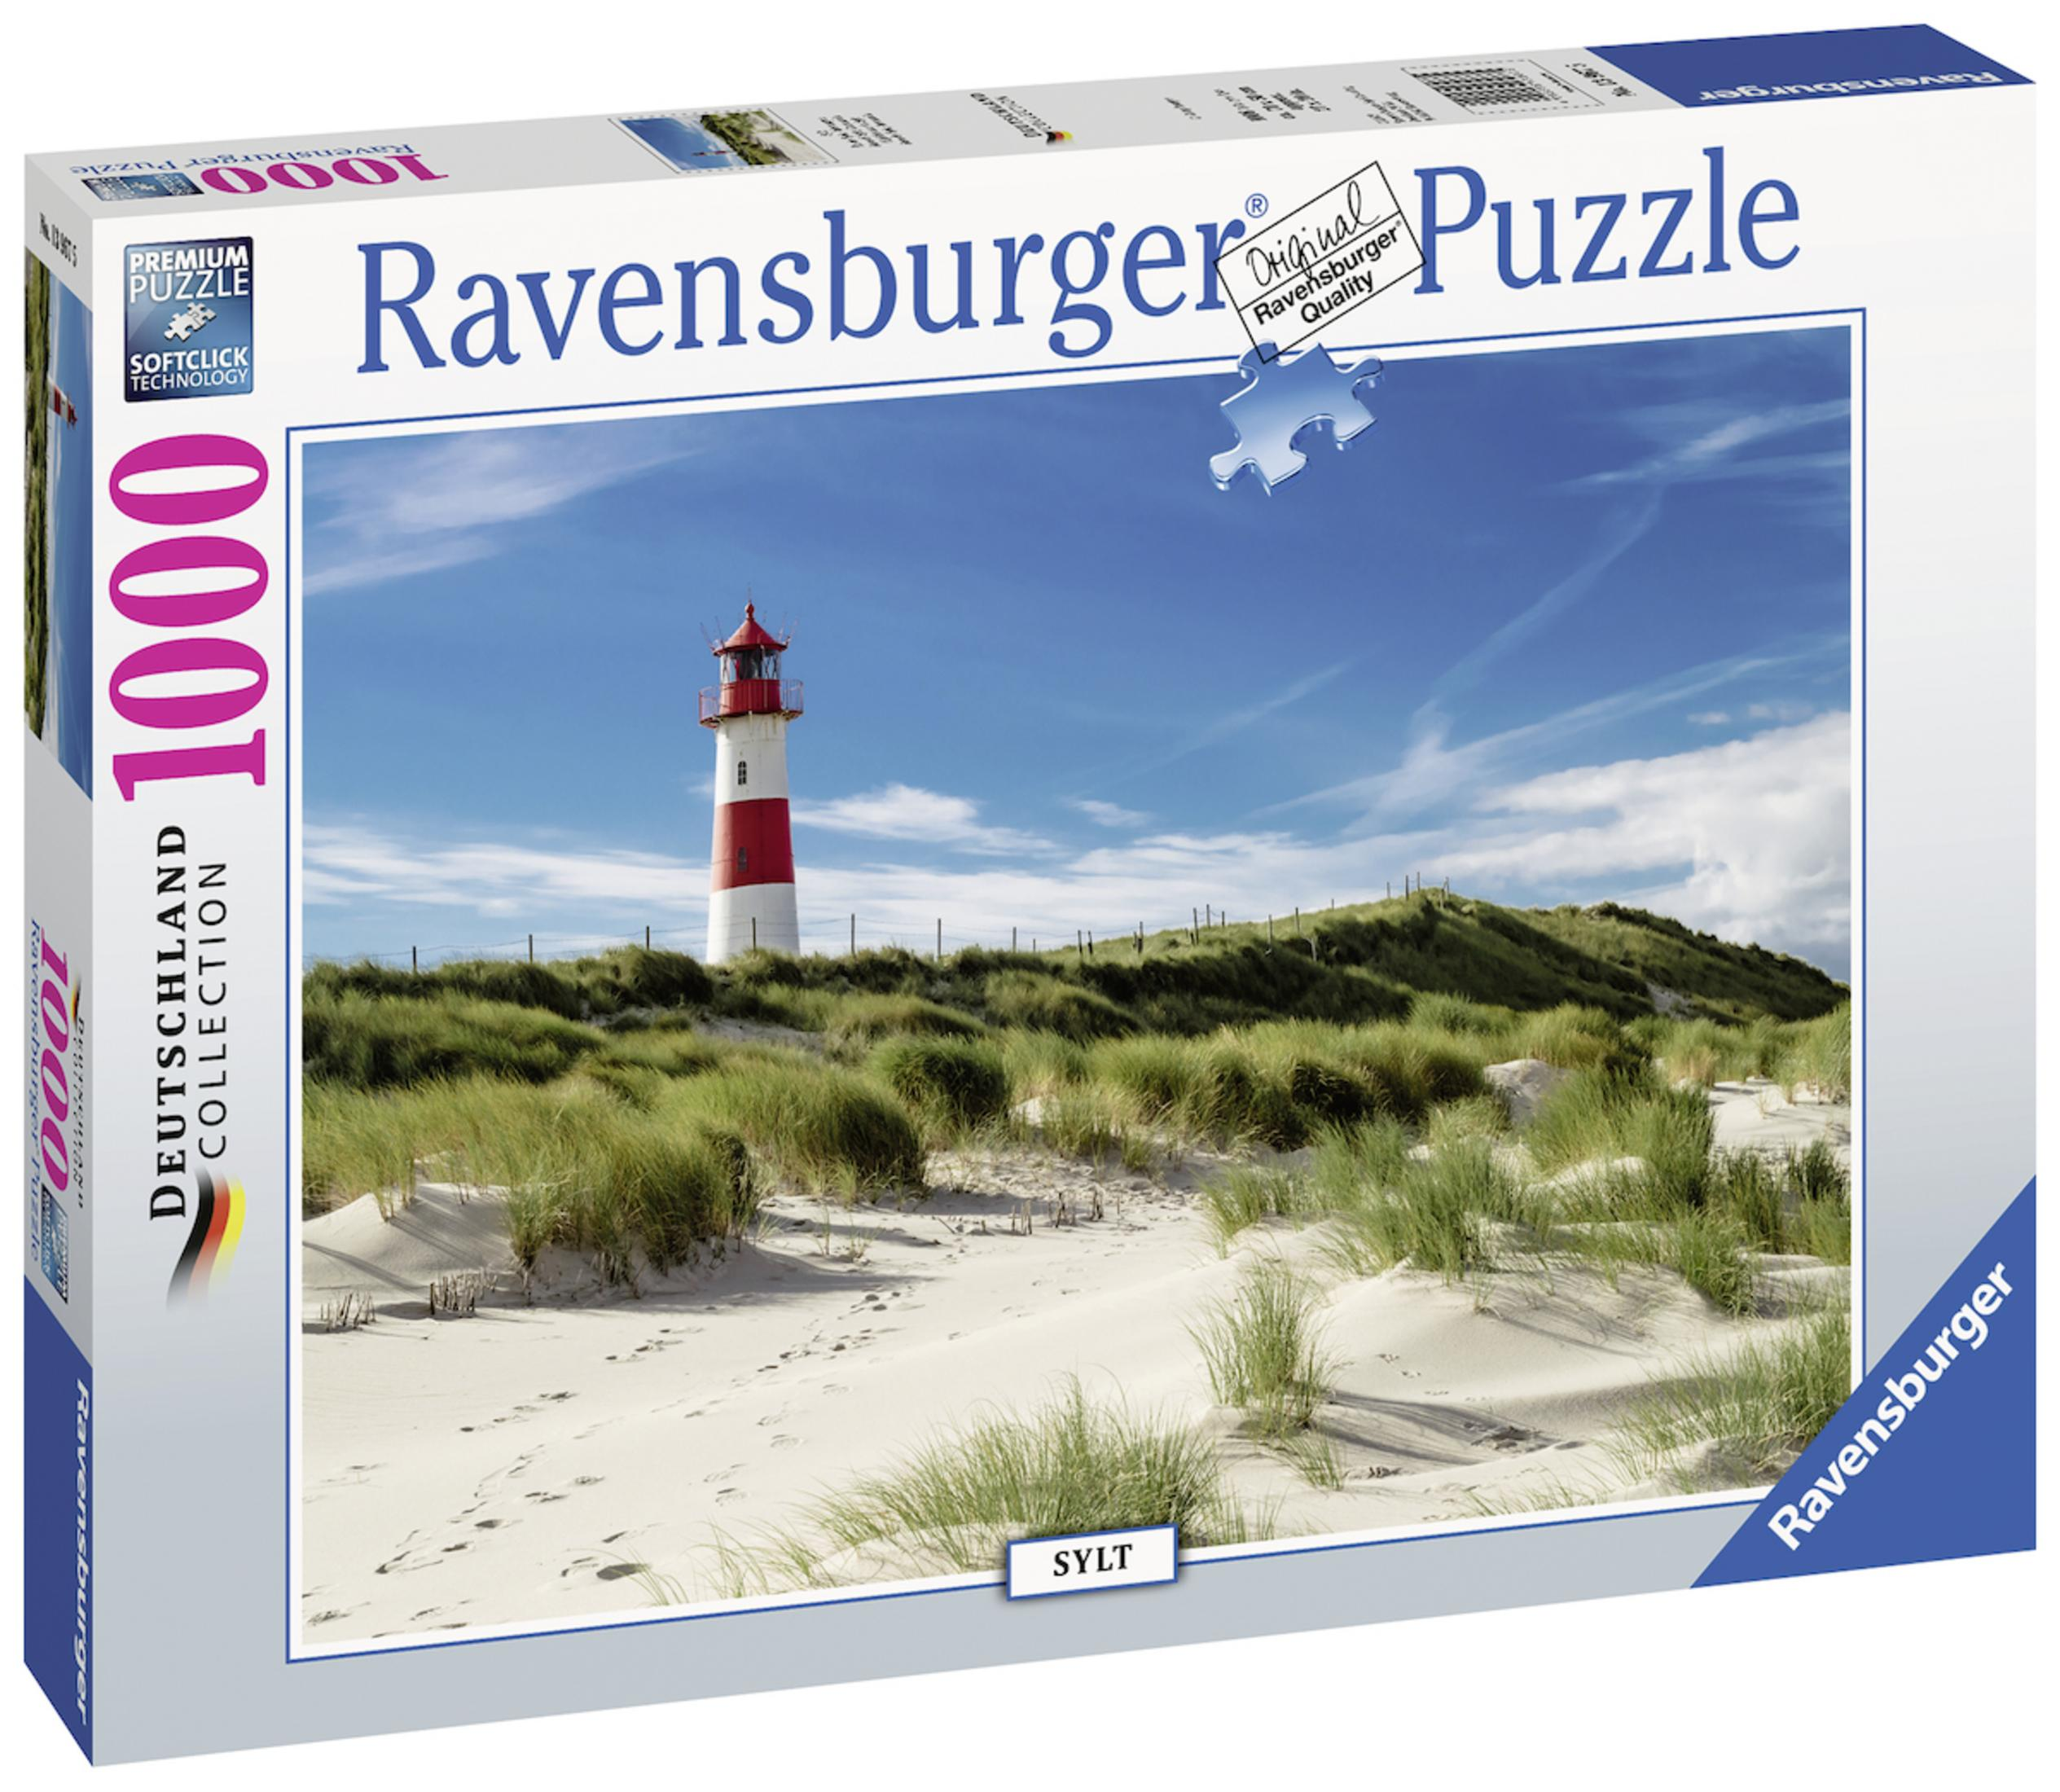 Puzzle SYLT 13967 RAVENSBURGER